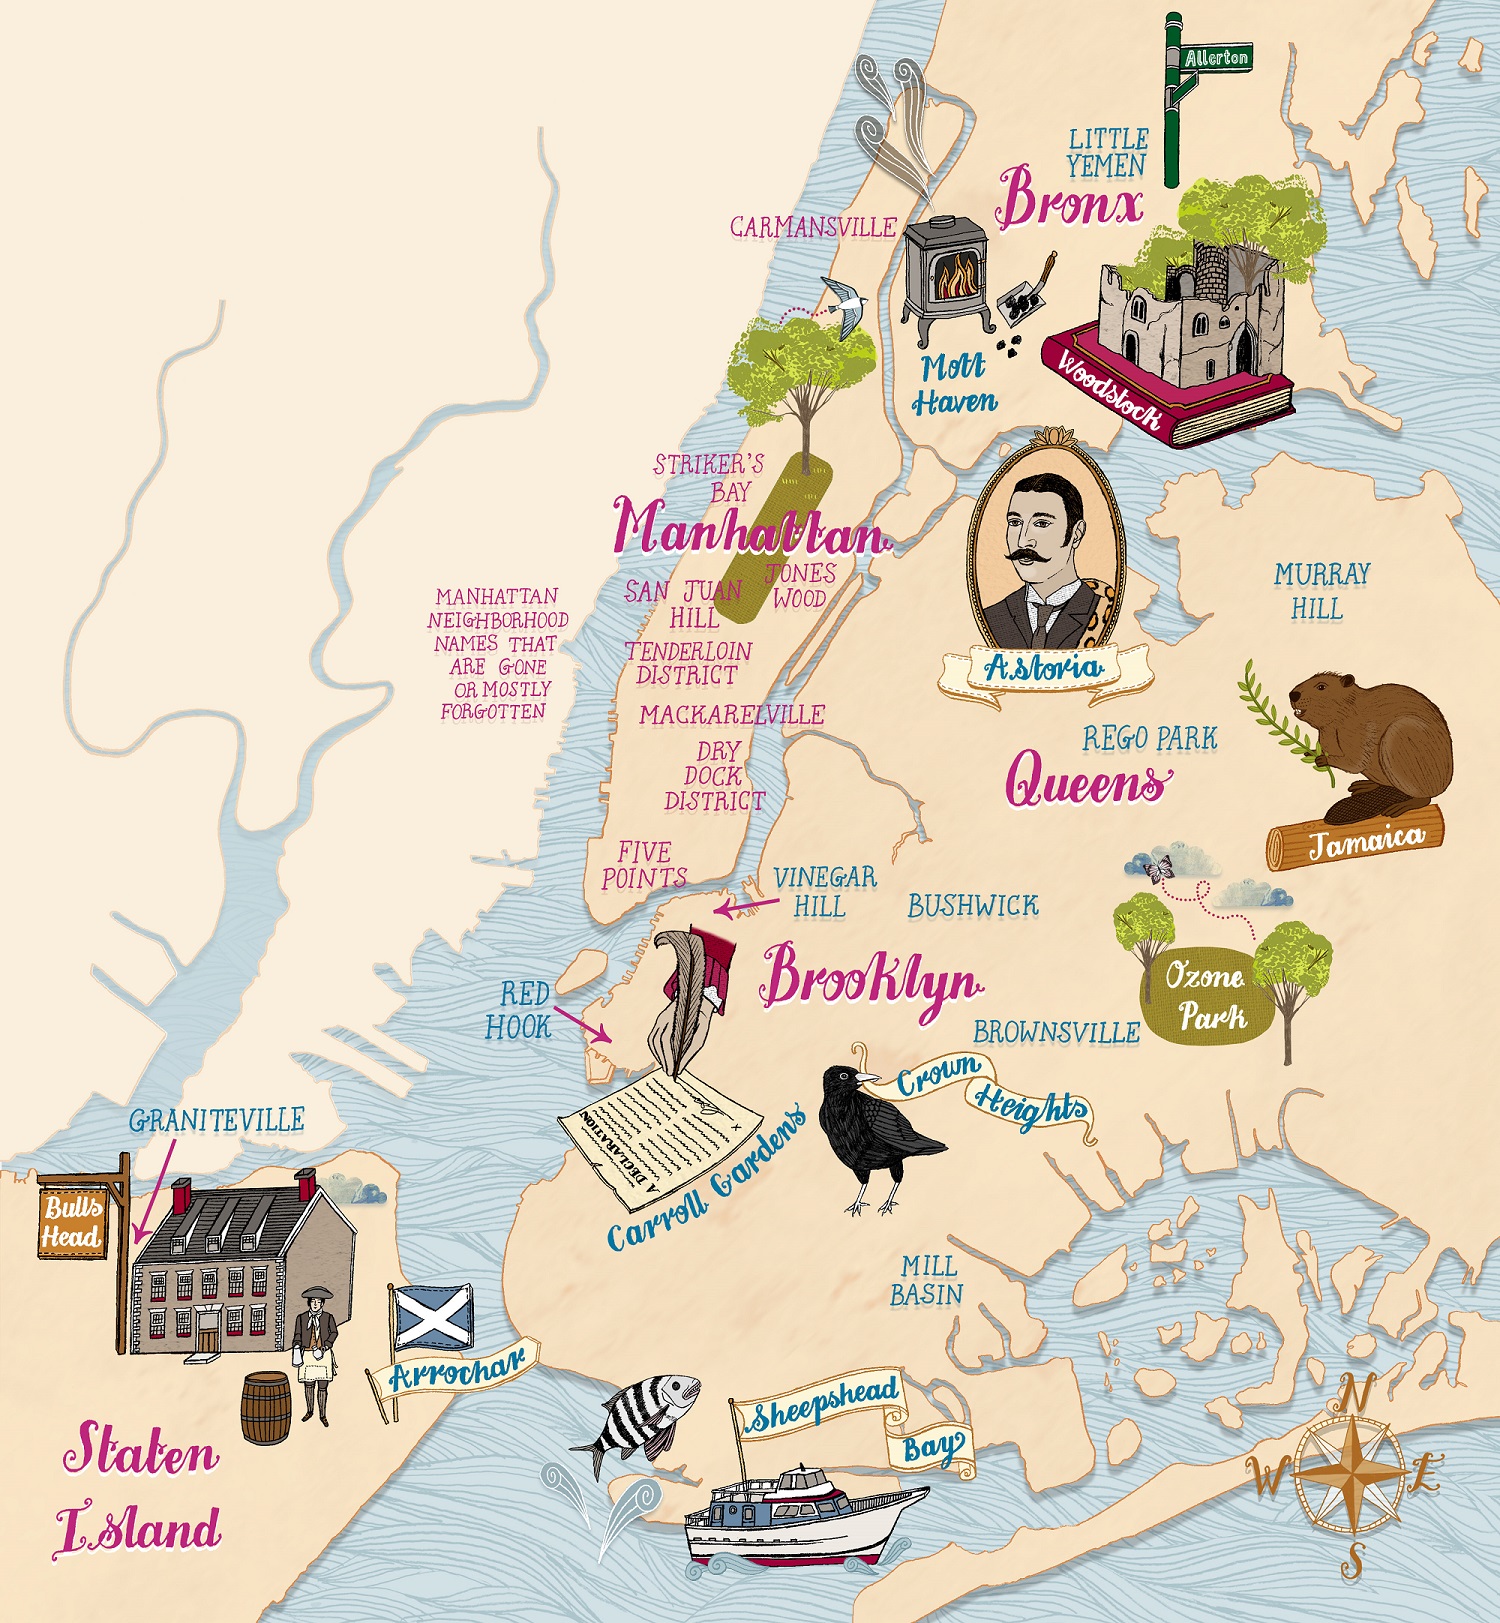 https://mendolaart.com/wp-content/uploads/2020/03/Final-Map-NYT-Neighborhoods-v.2-100x100.jpg